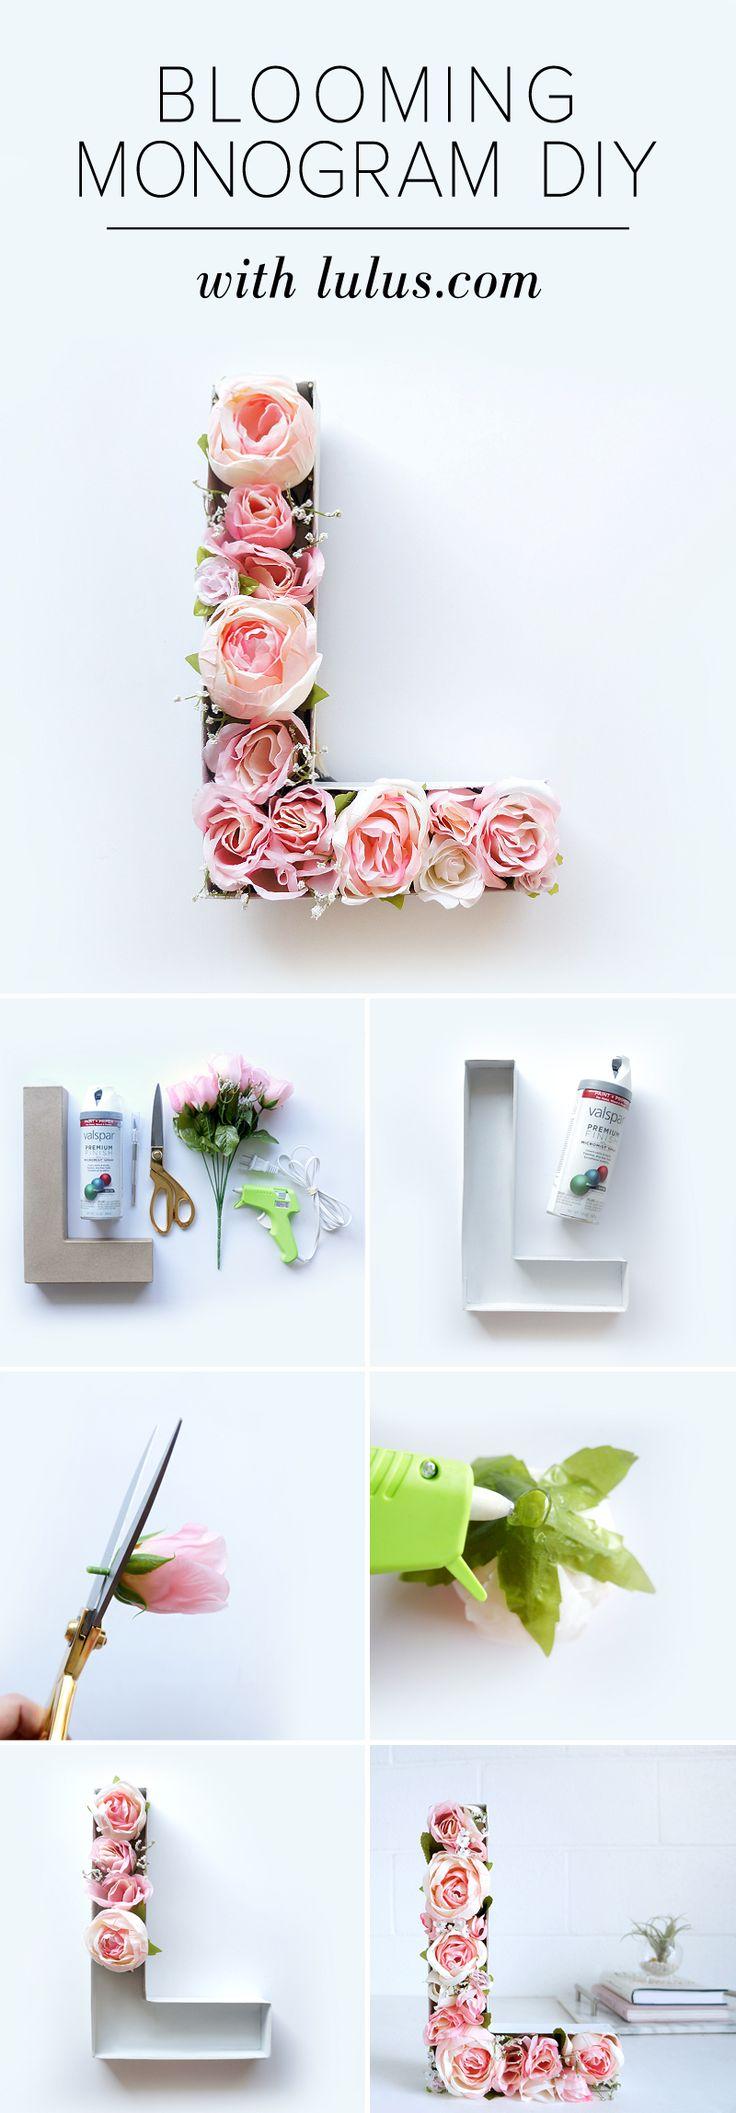 Wedding - Blooming Monogram DIY